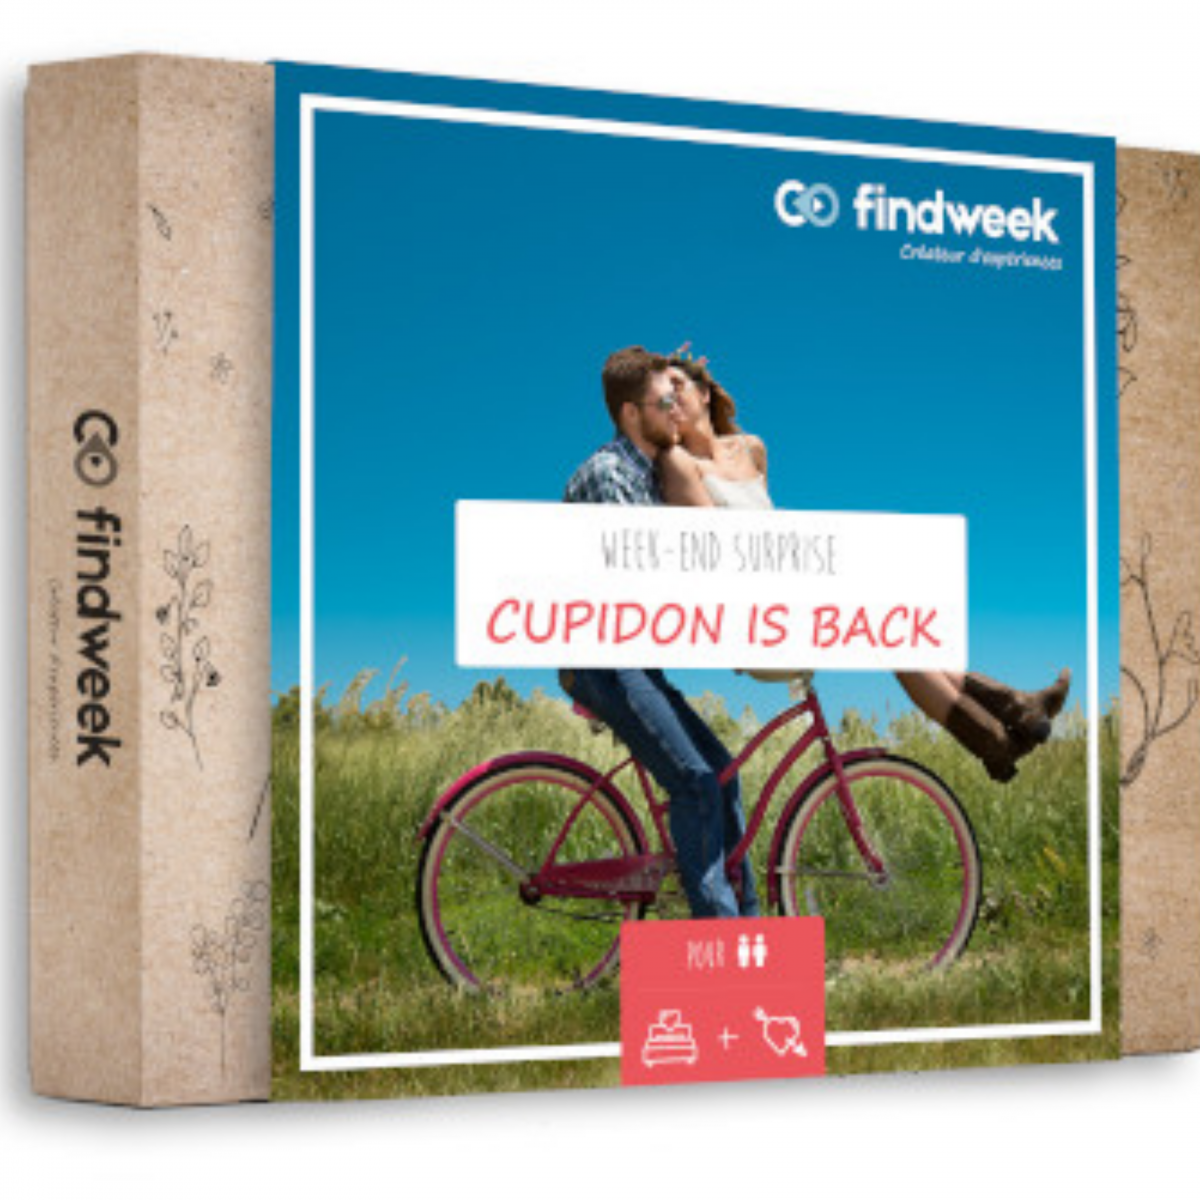 Week-end surprise "Cupidon is back"